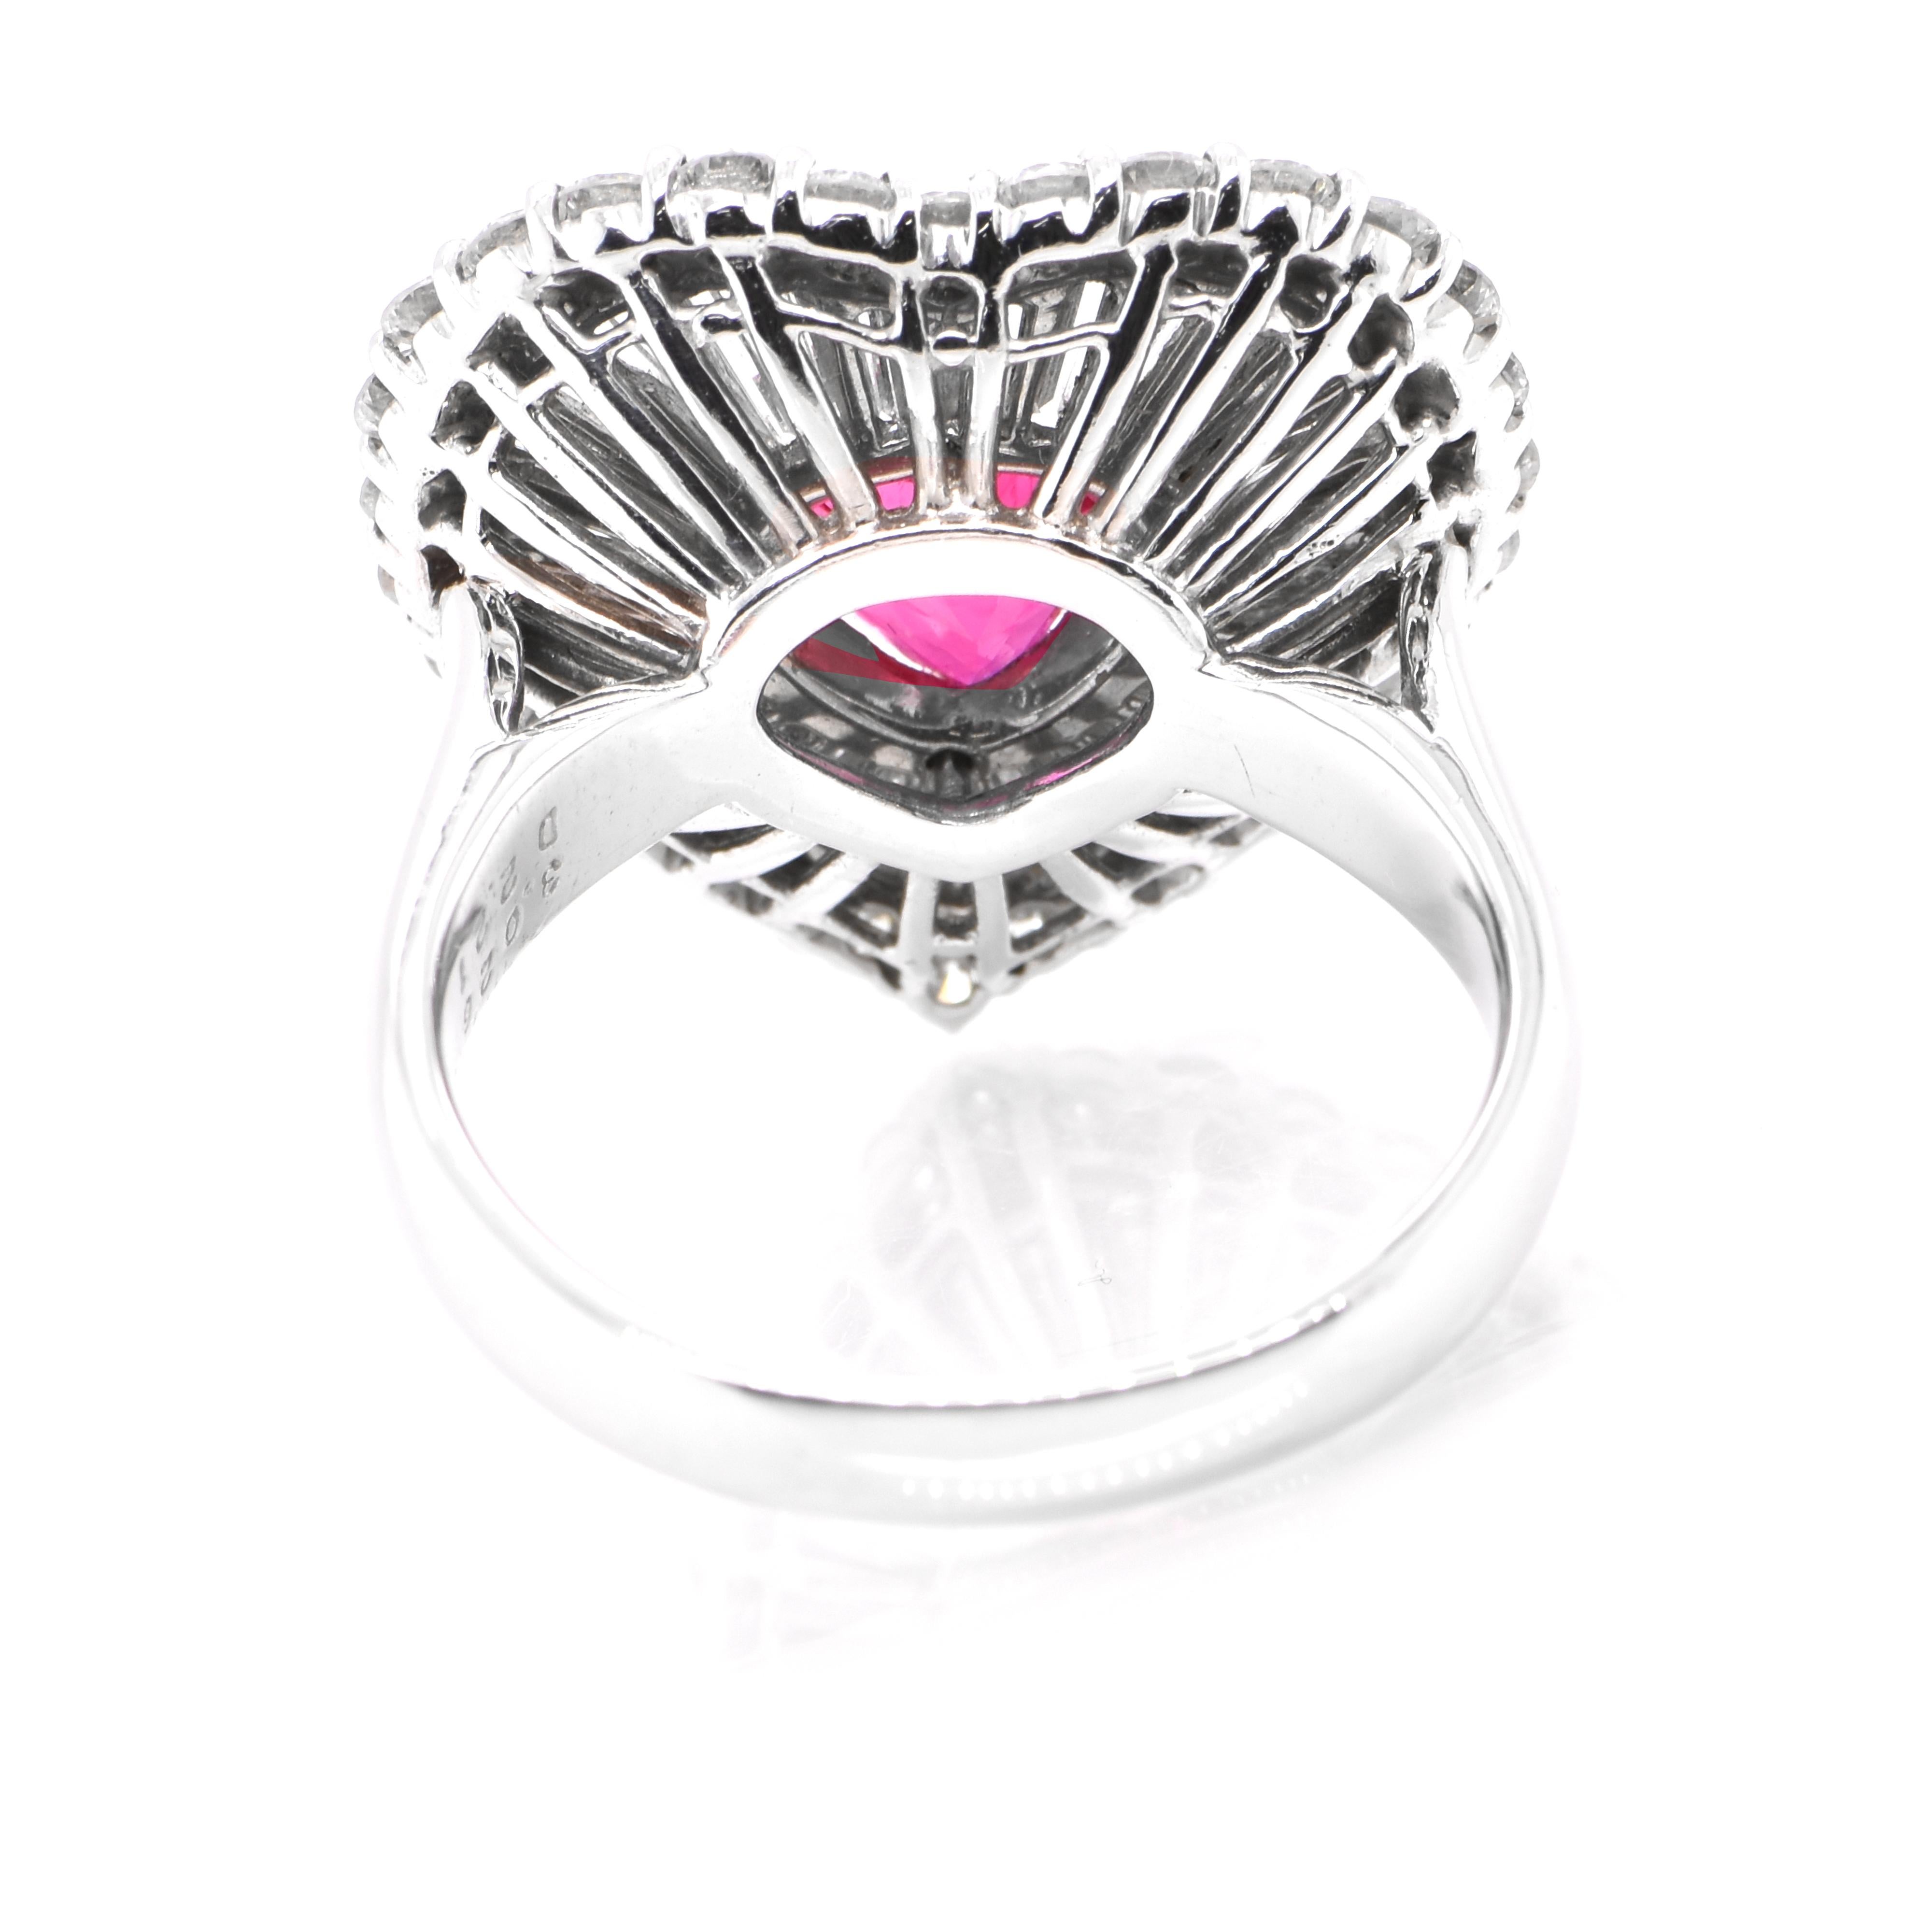 Women's GIA Certified 3.02 Carat Natural Burmese Ruby and Diamond Ring Set in Platinum